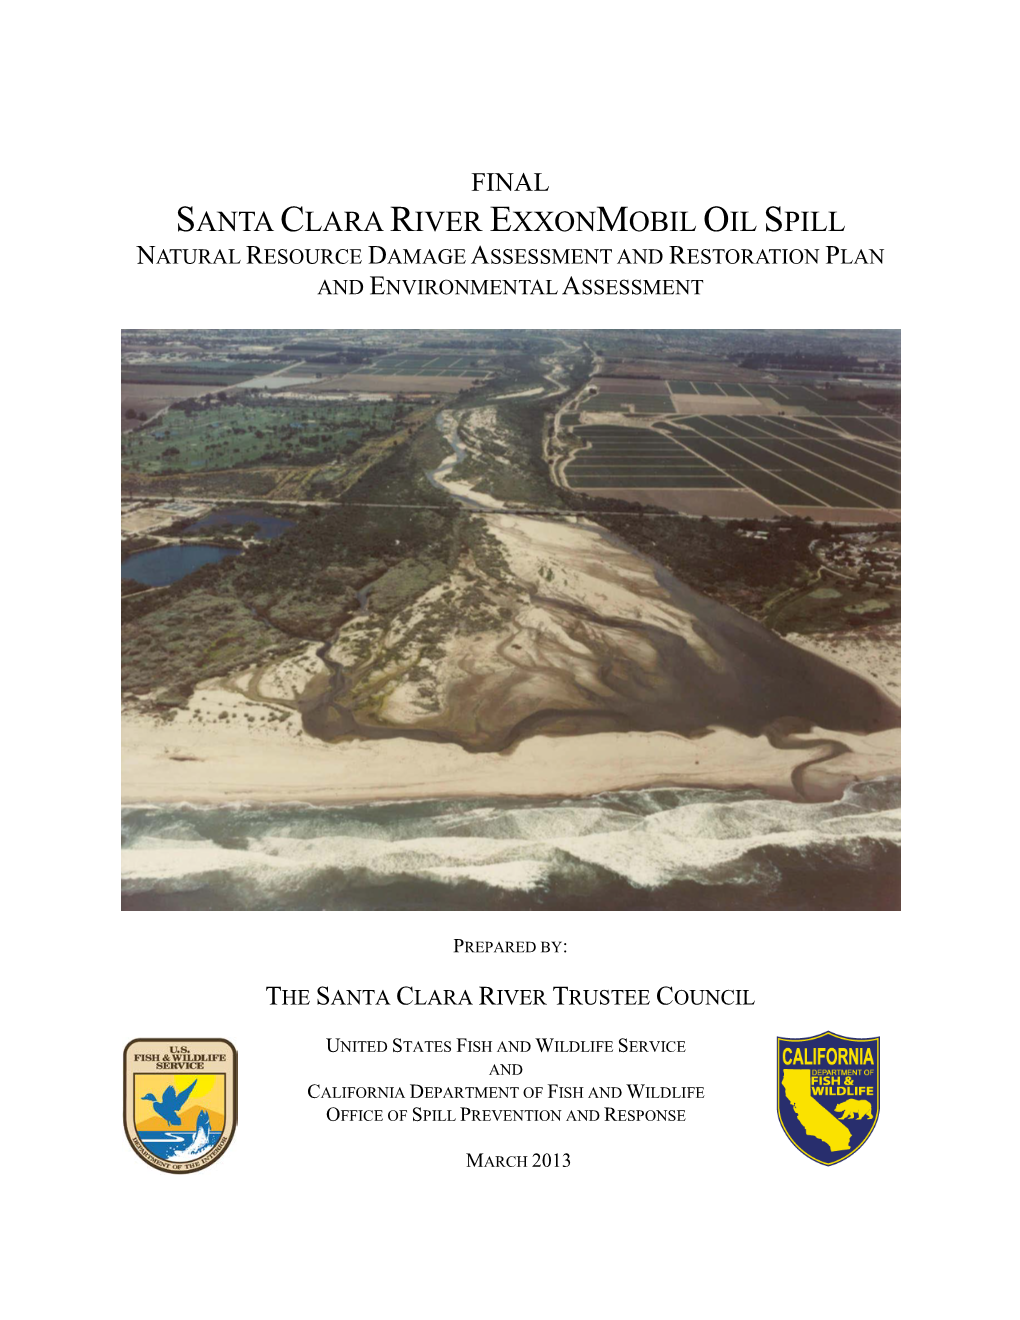 Final Santa Clara River Exxonmobil Oil Spill Natural Resource Damage Assessment and Restoration Plan and Environmental Assessment